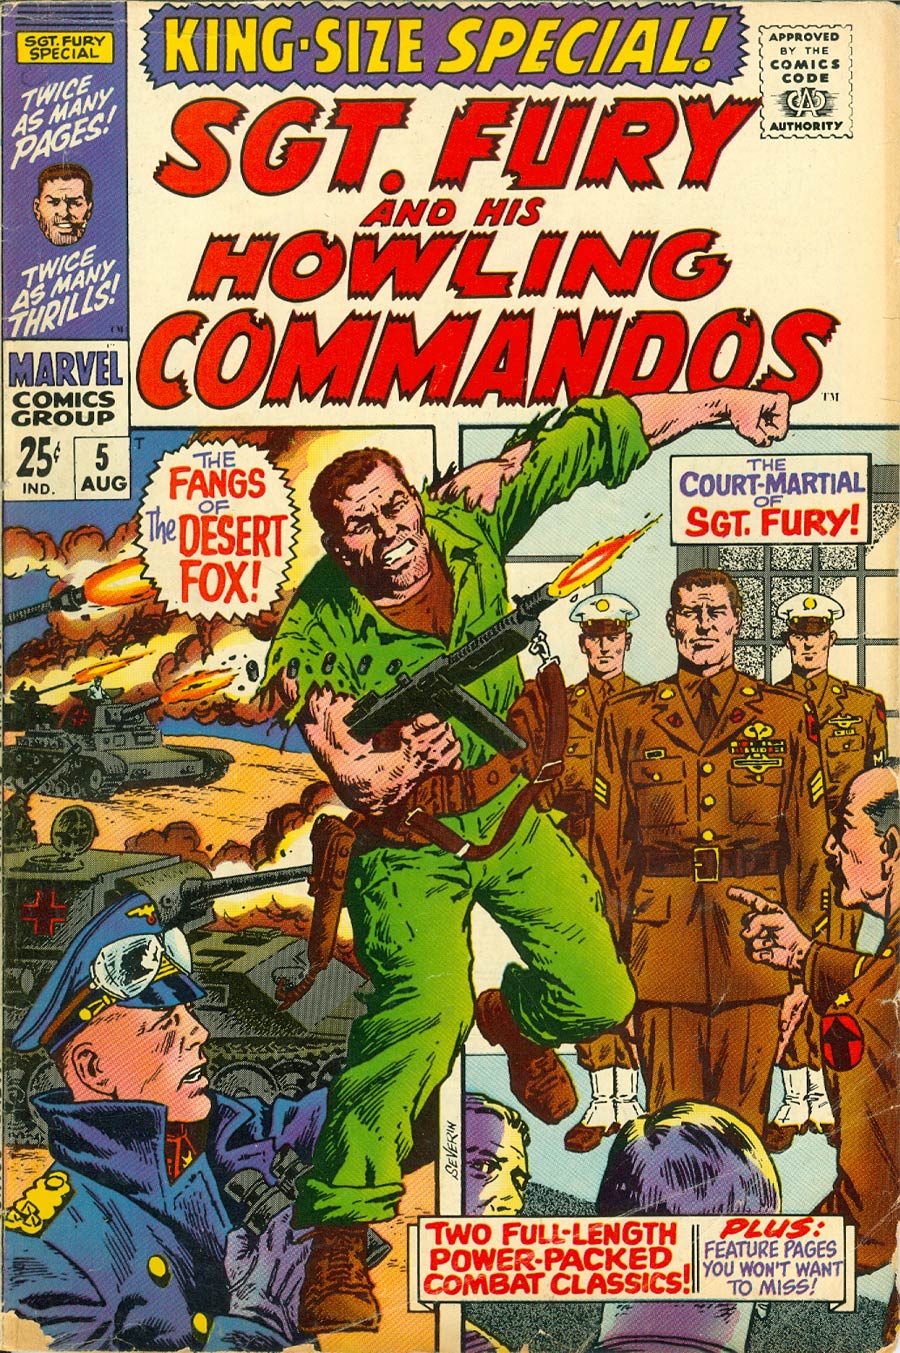 Sgt. Fury & His Howling Commandos Special #5